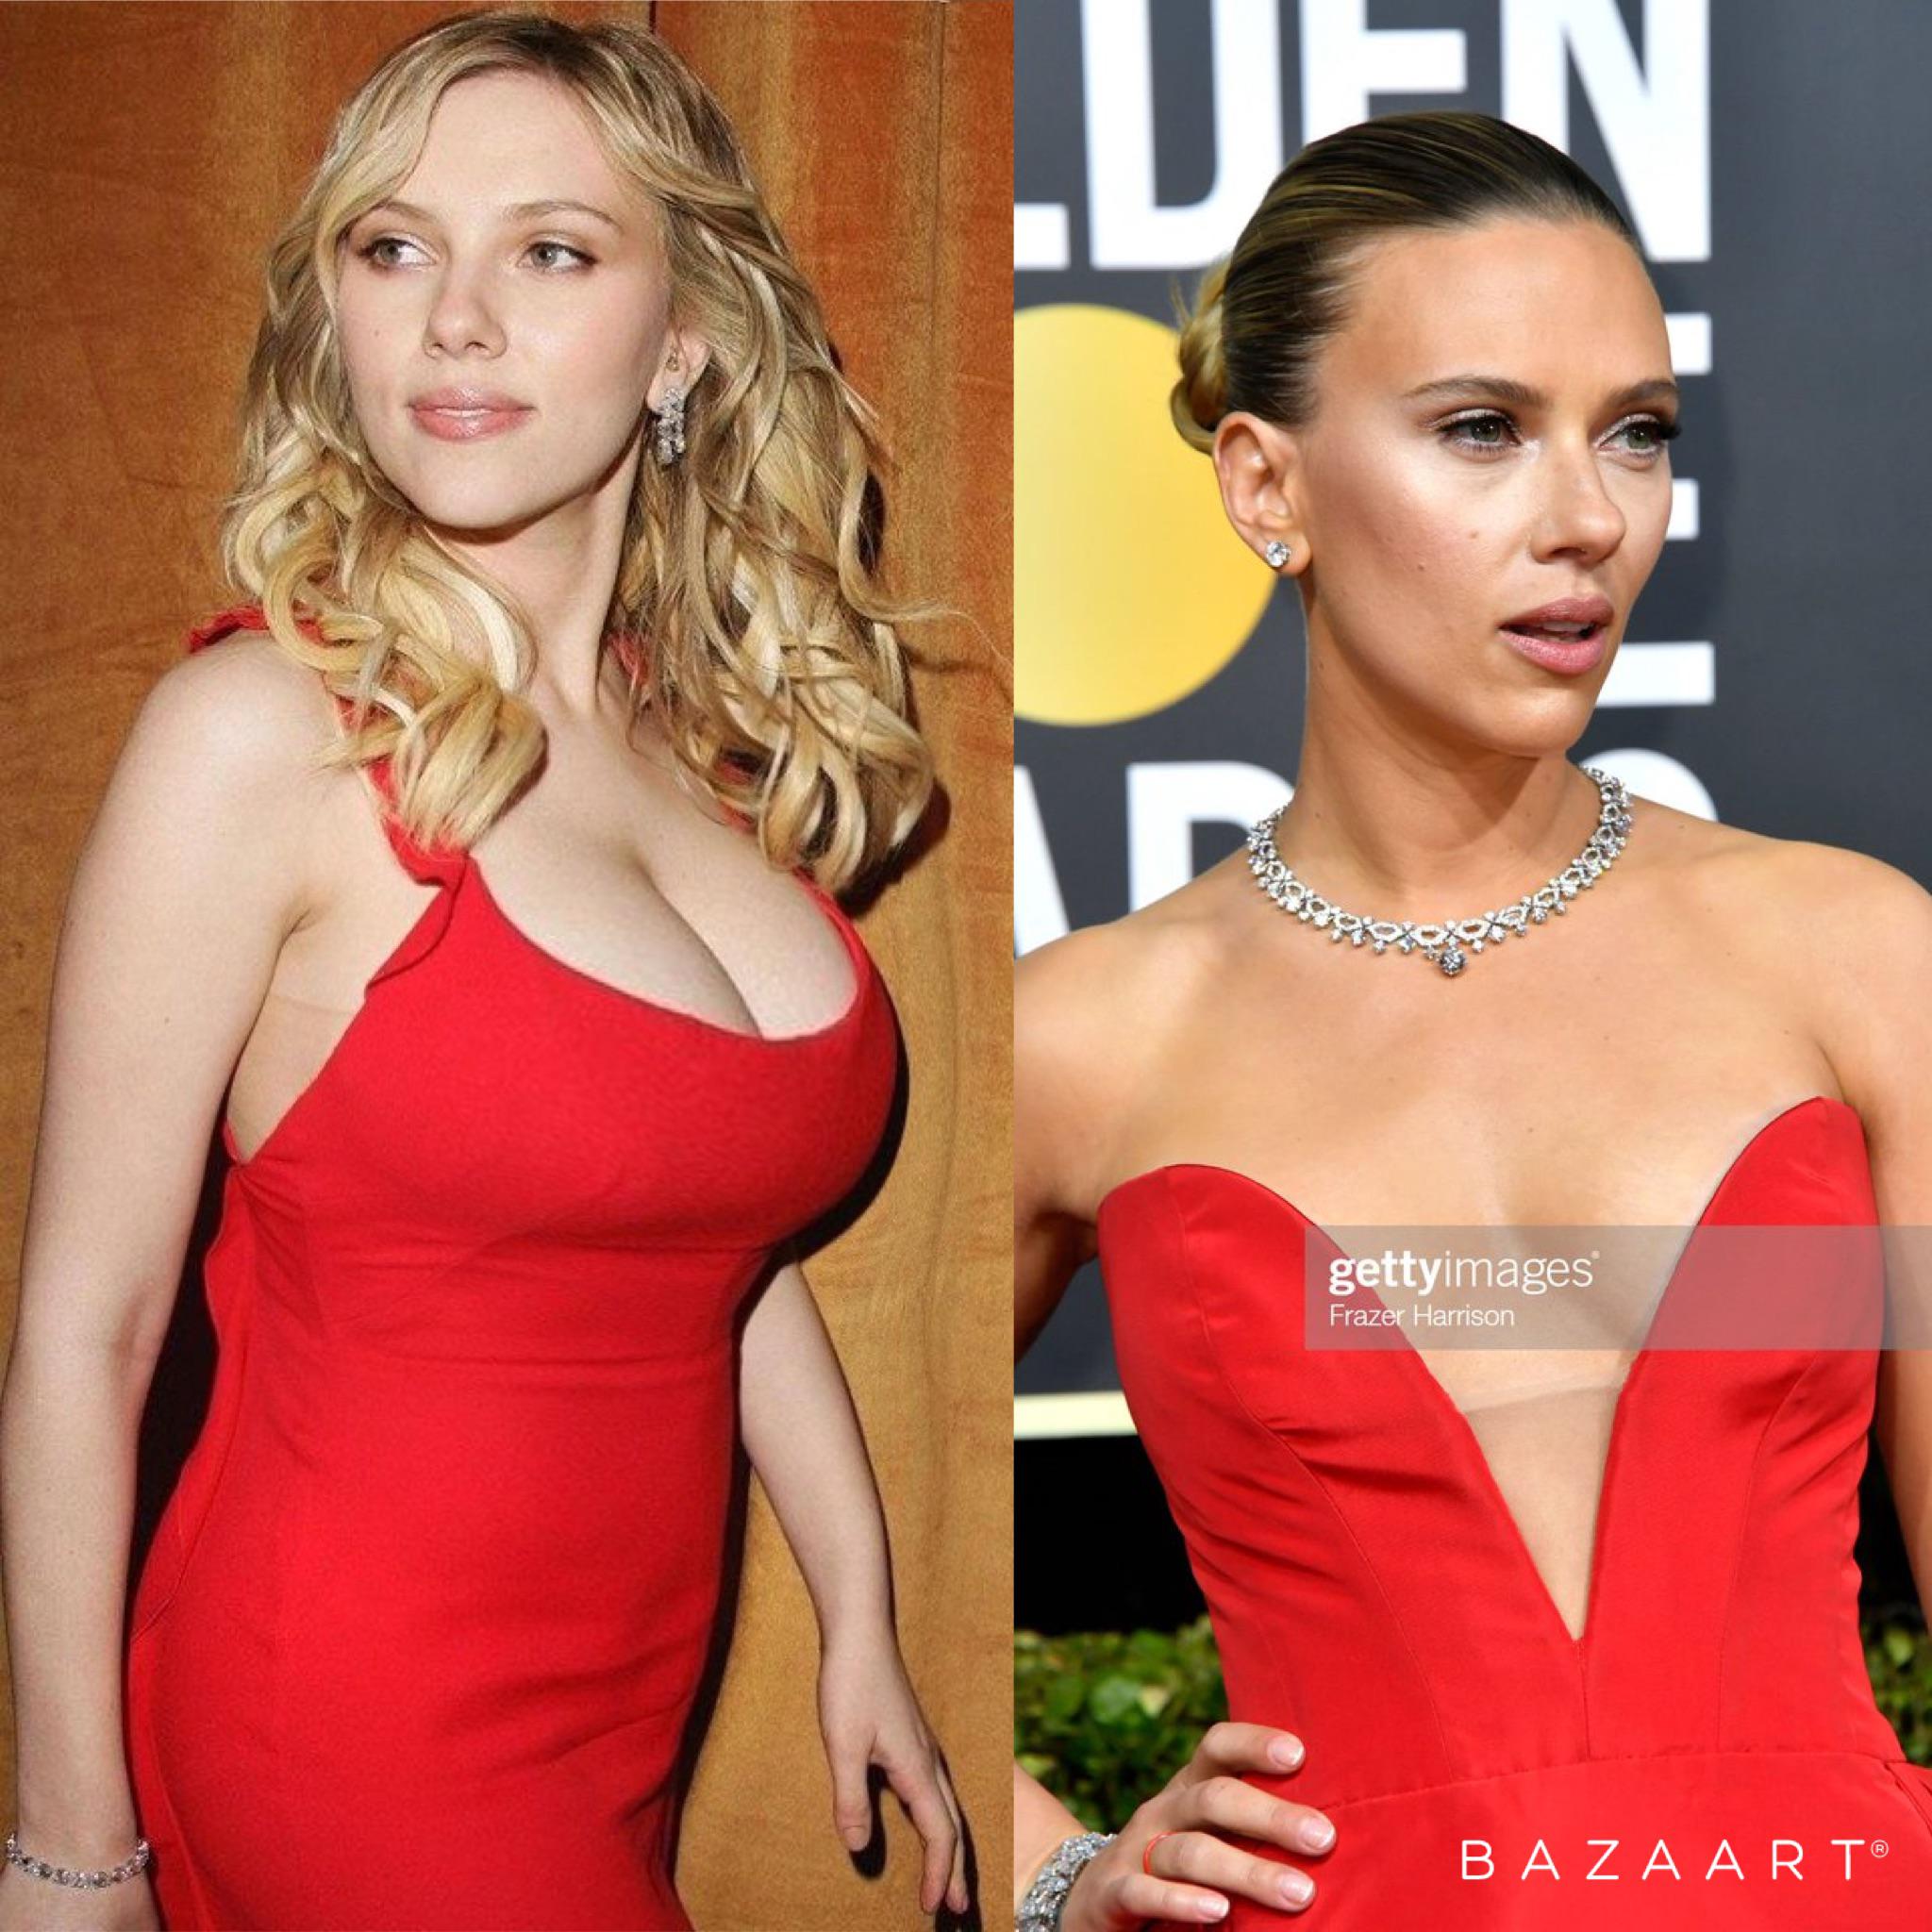 Scarlett Johansson - Do you guys prefer bigger or skinny? 2